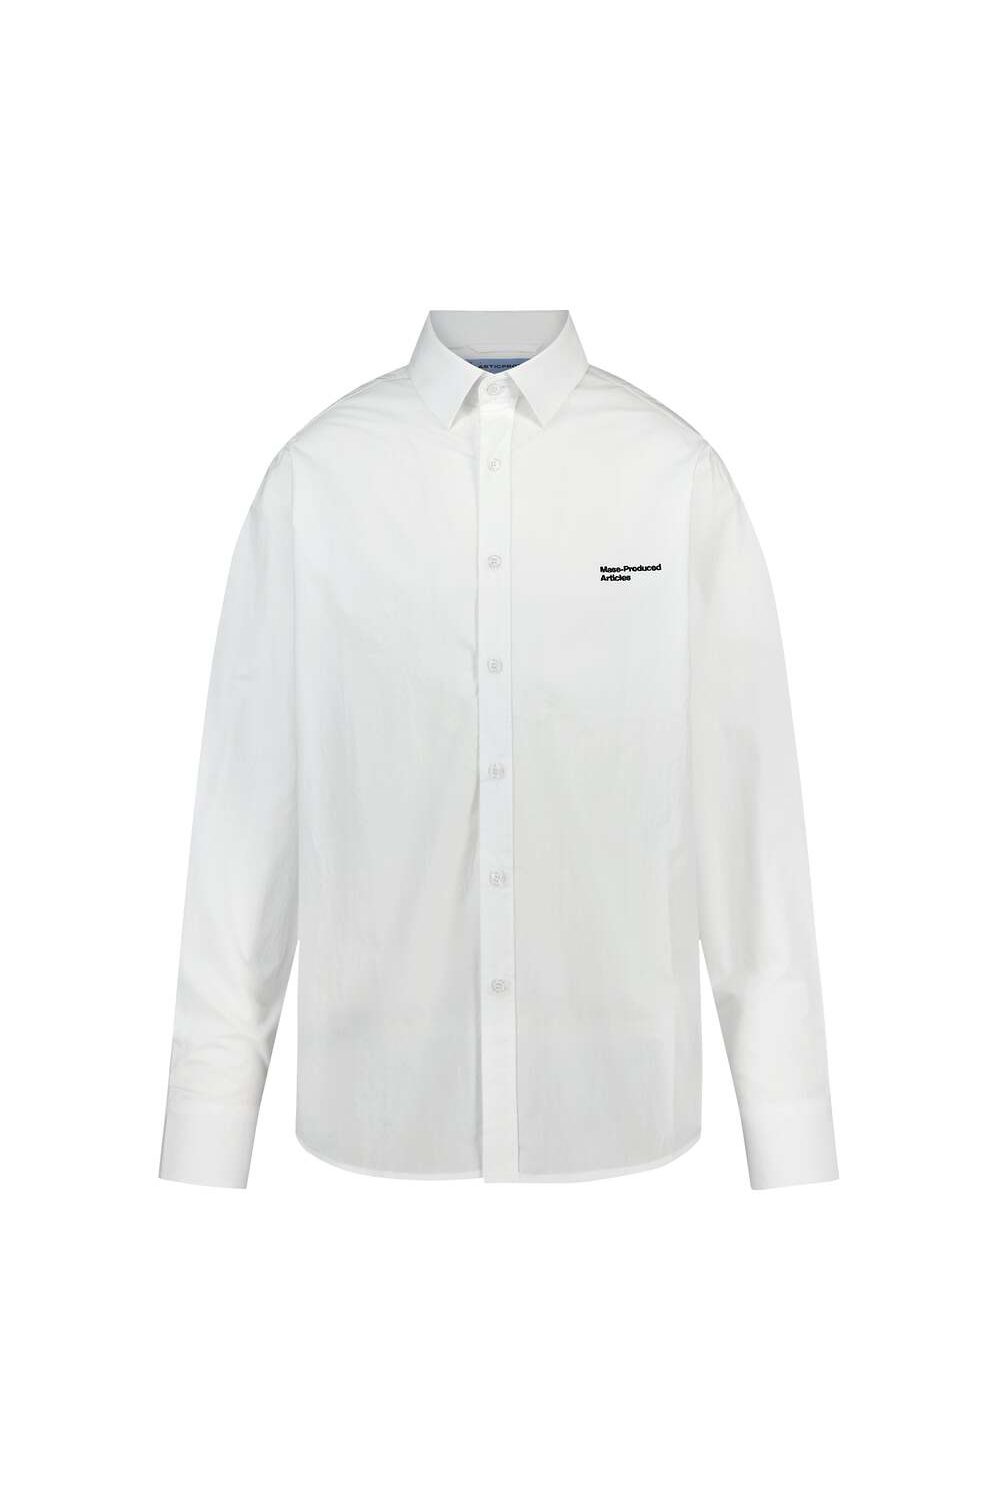 Mpa Shirt - White